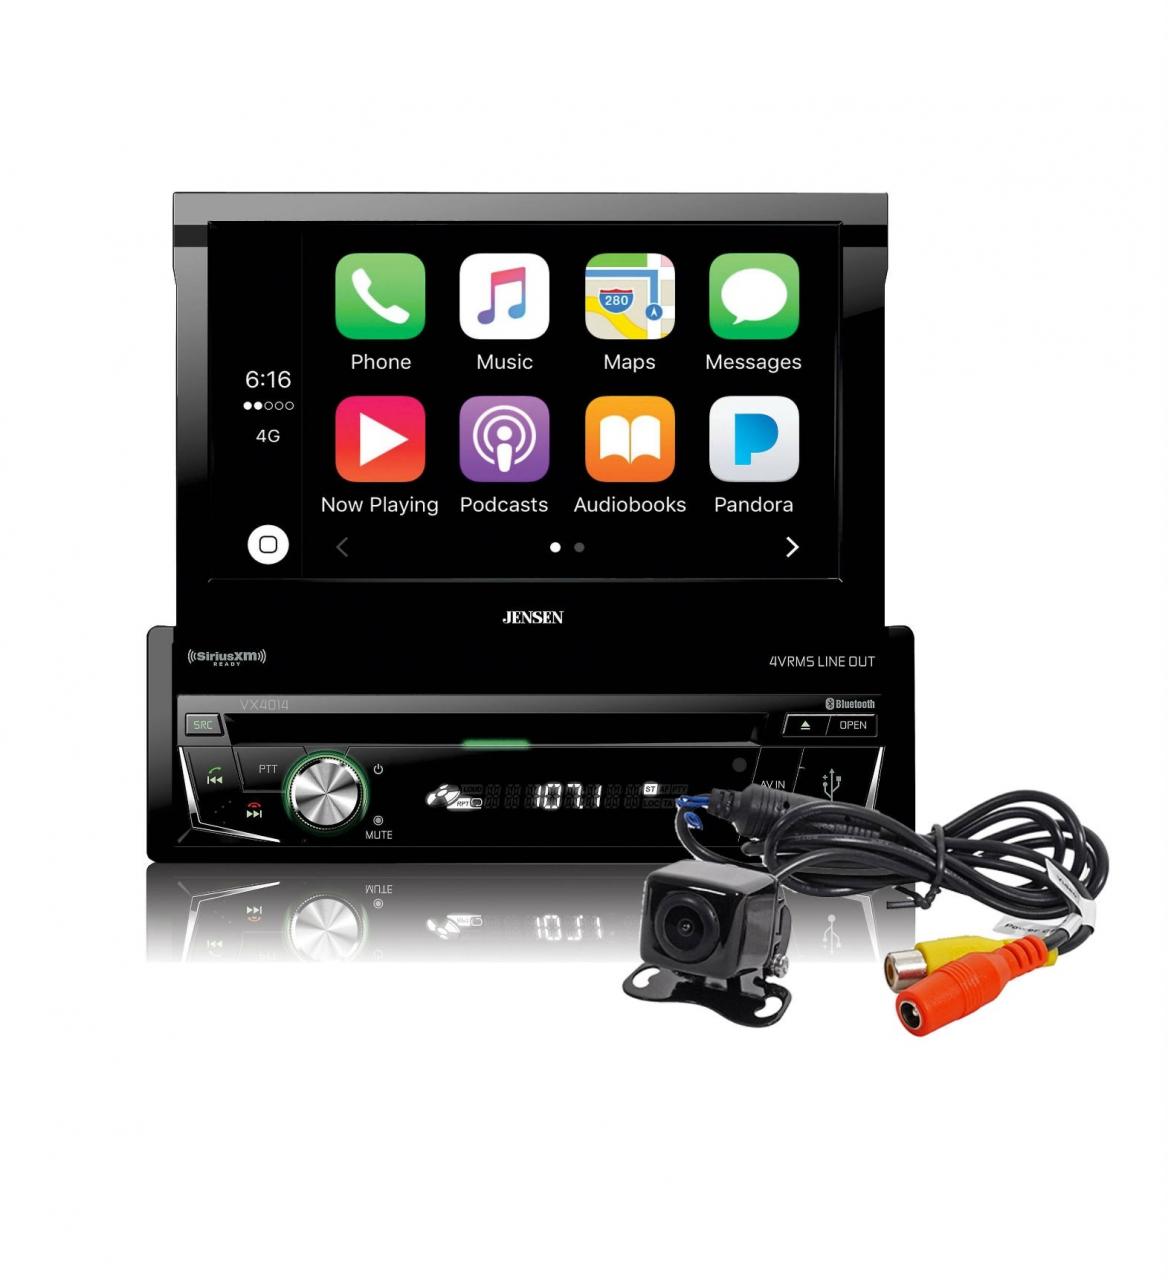 Jensen Mobile - Car Audio, Video & Navigation